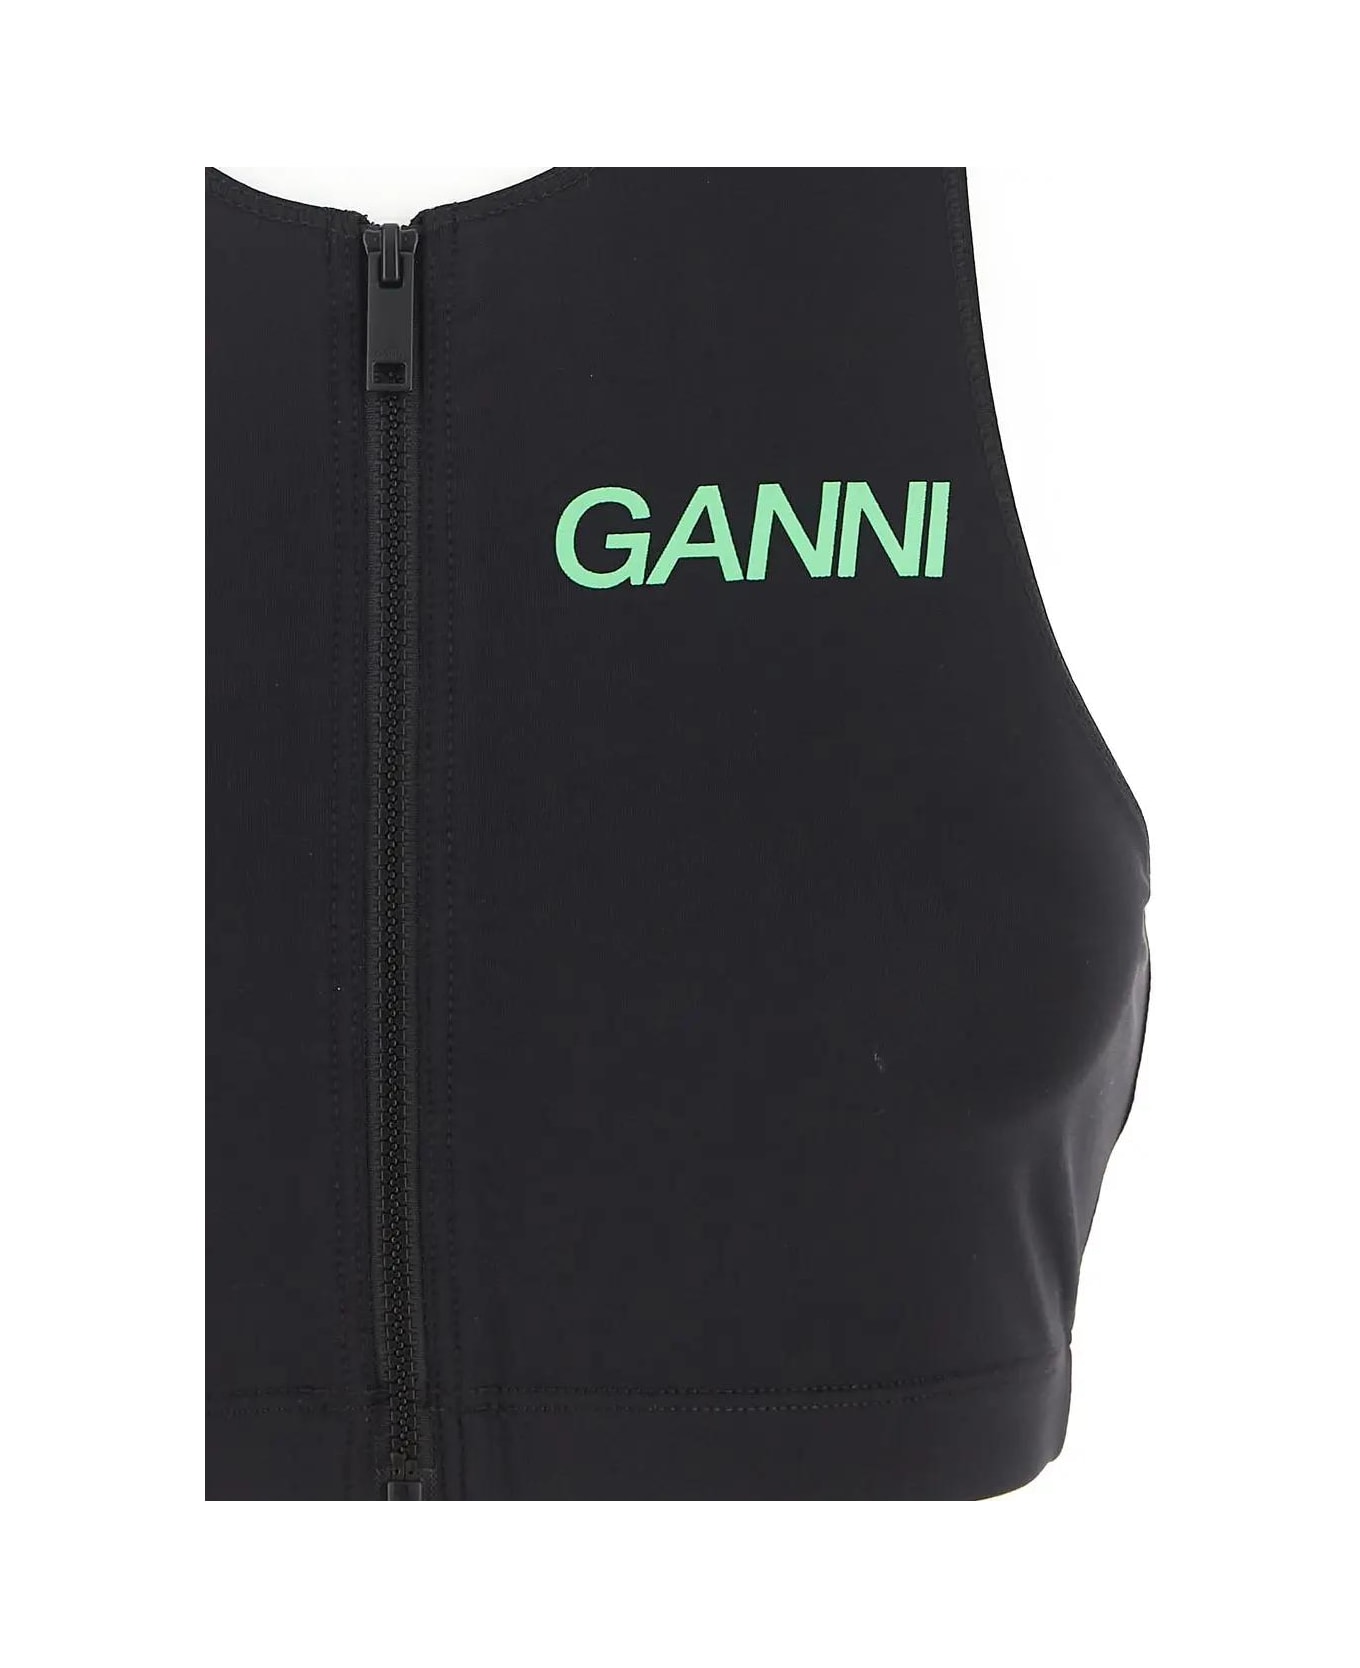 Ganni Racerback Logo Top - Black